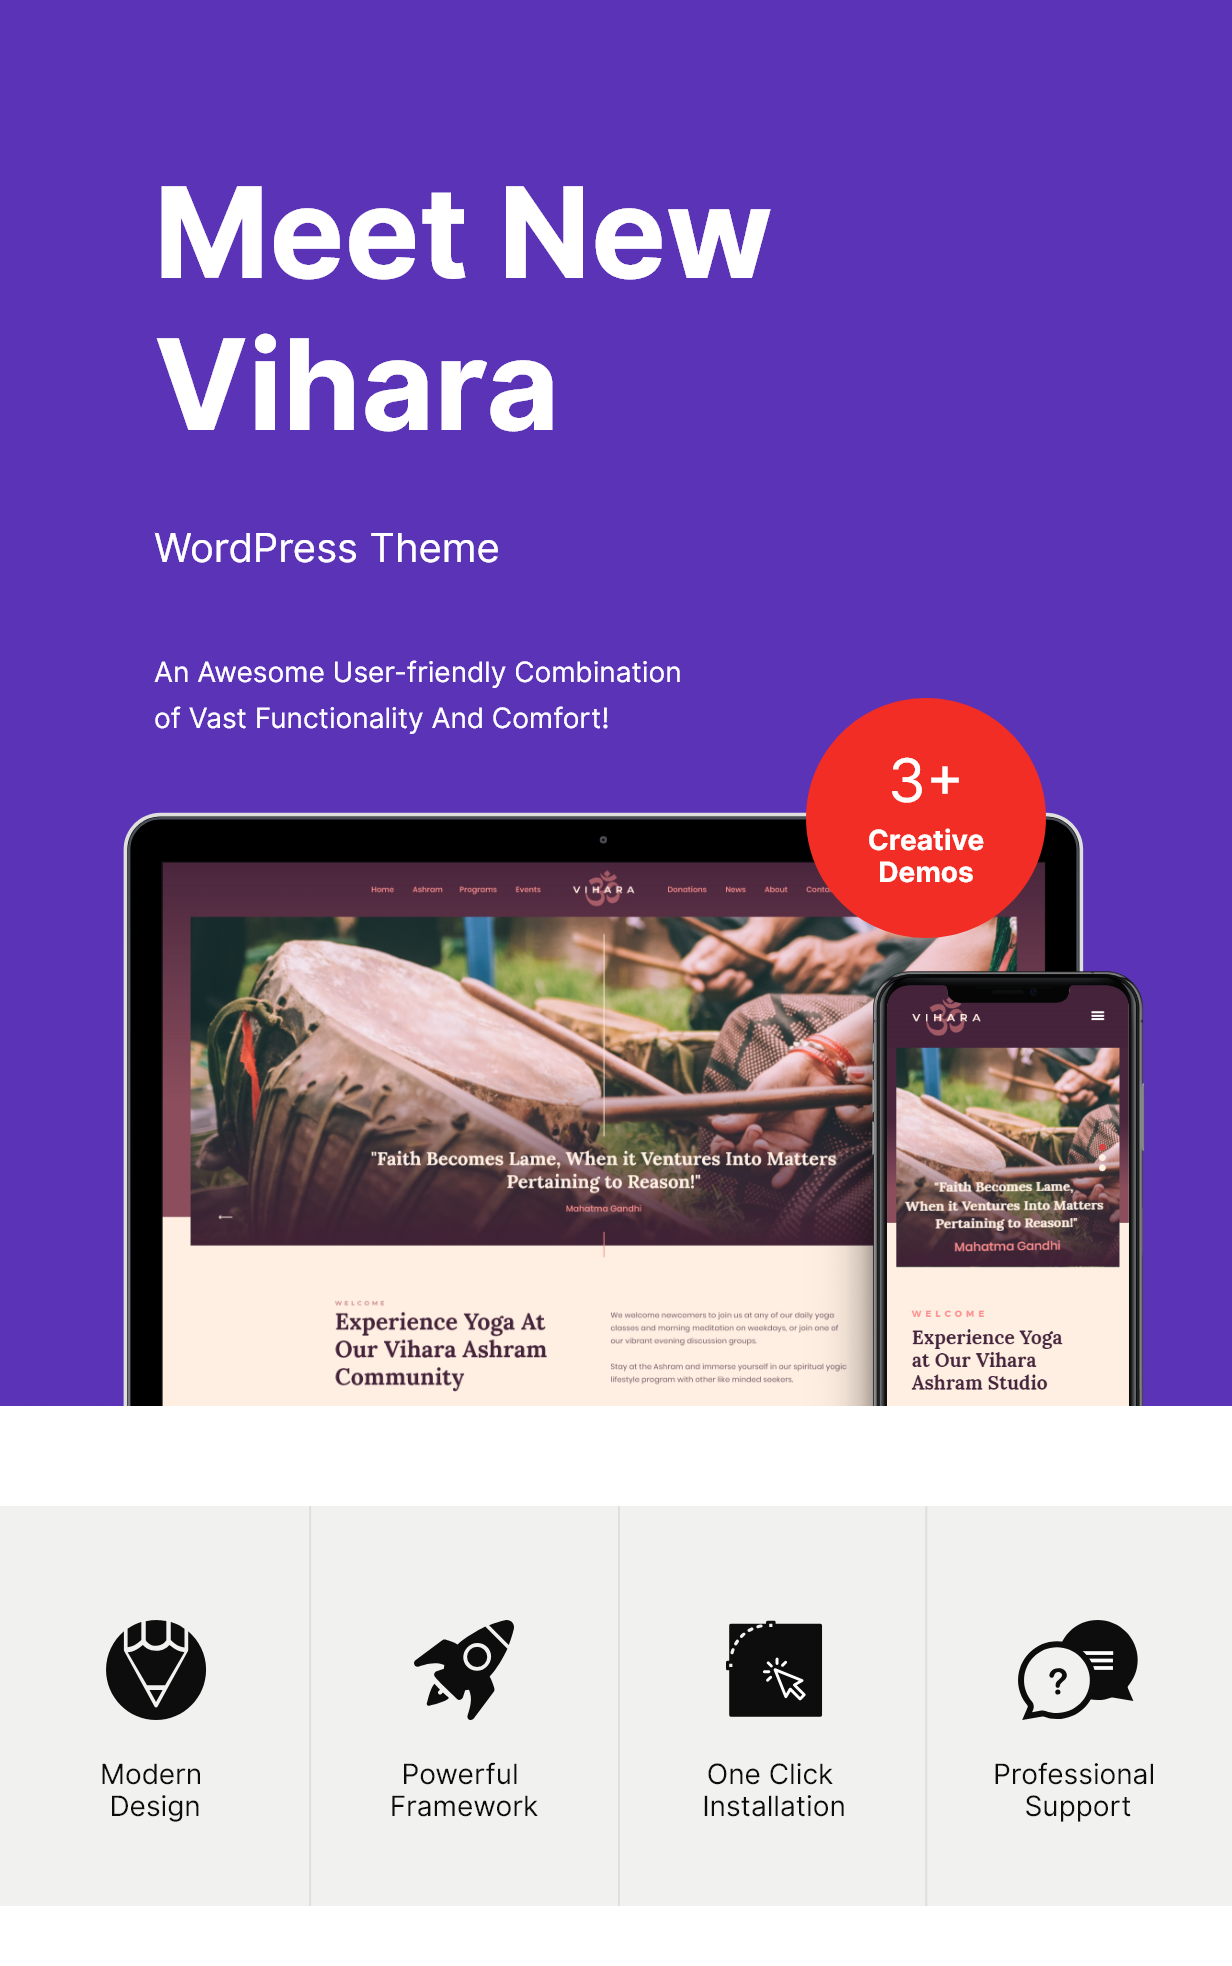 Vihara | Ashram Oriental Buddhist Temple WordPress Theme - 1